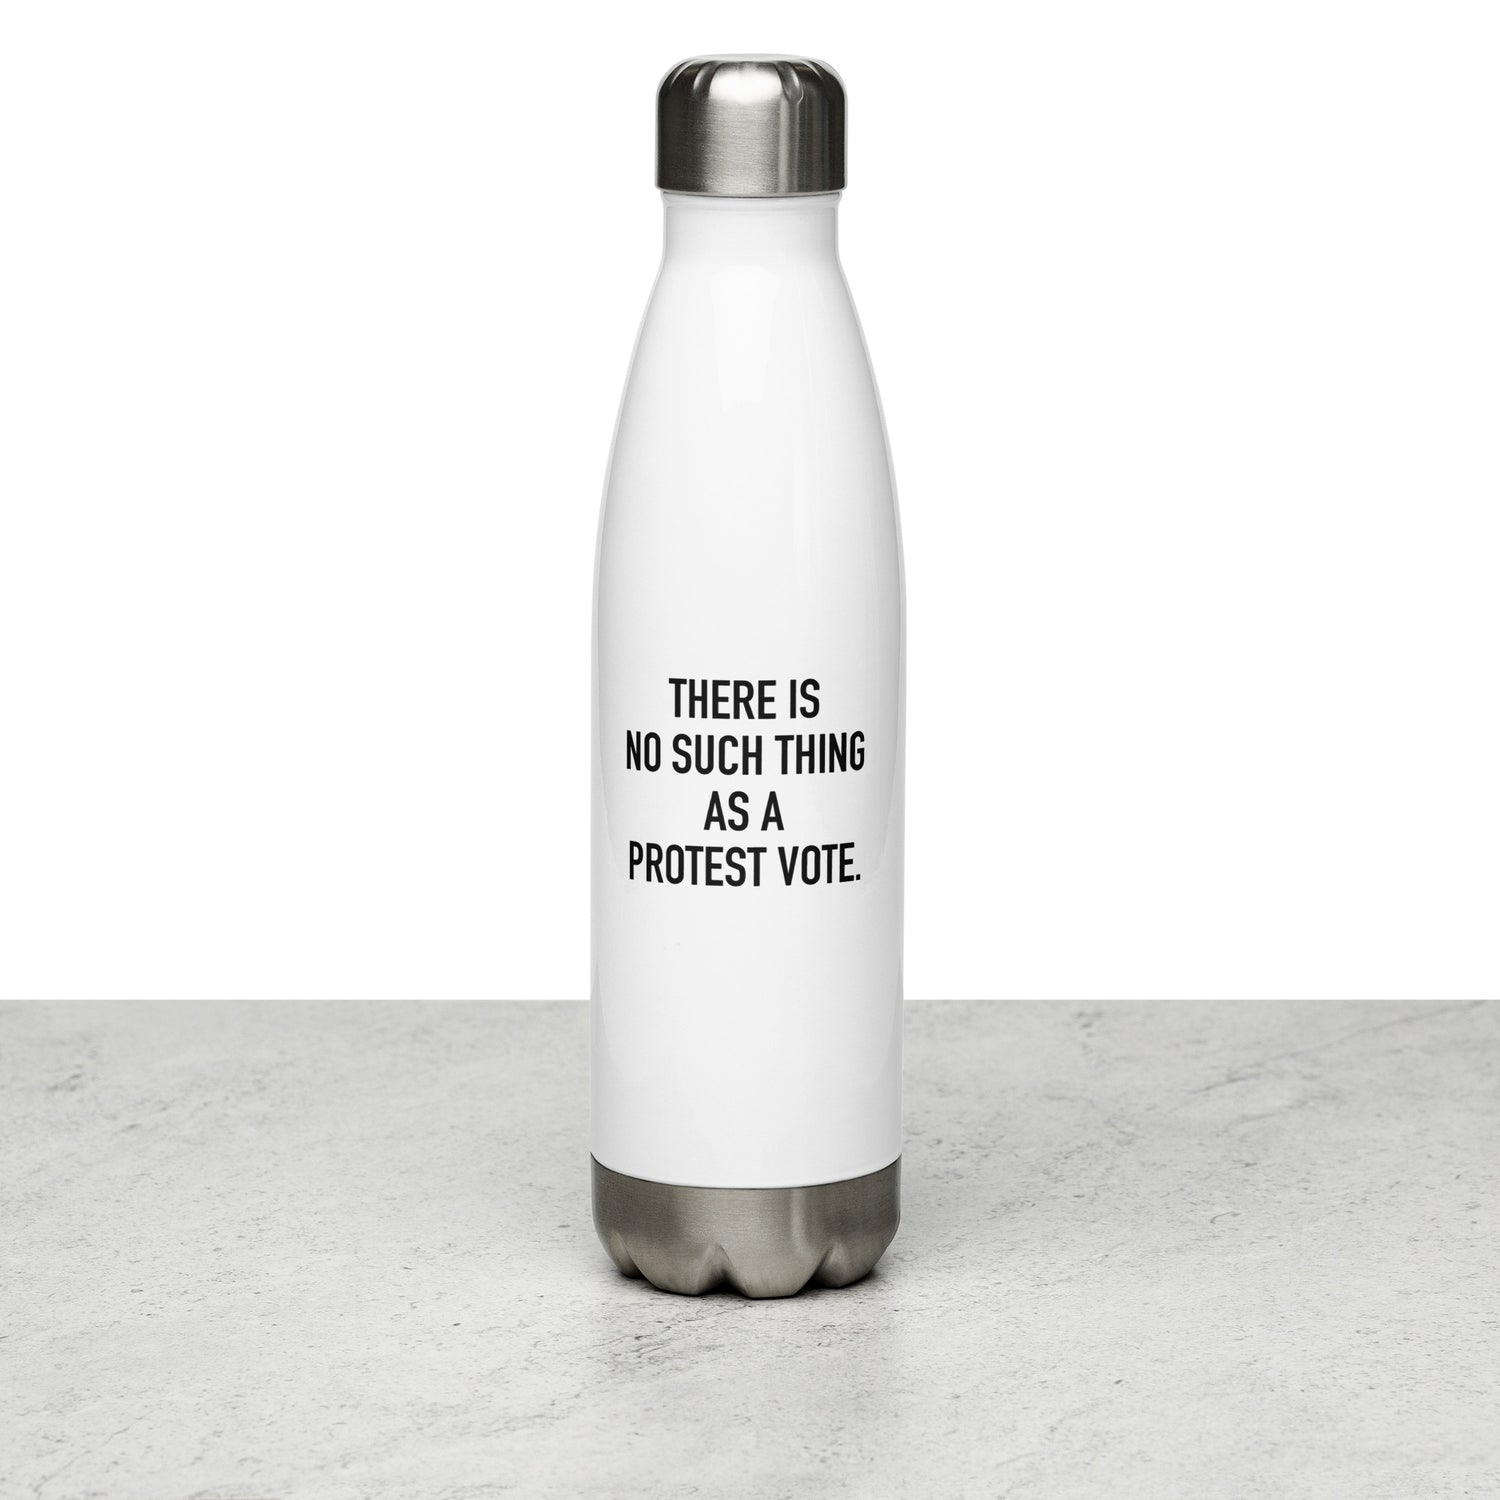 Your Vote Matters Stainless Steel Emancipation Abolition Enfranchisement Statement Water Bottle 